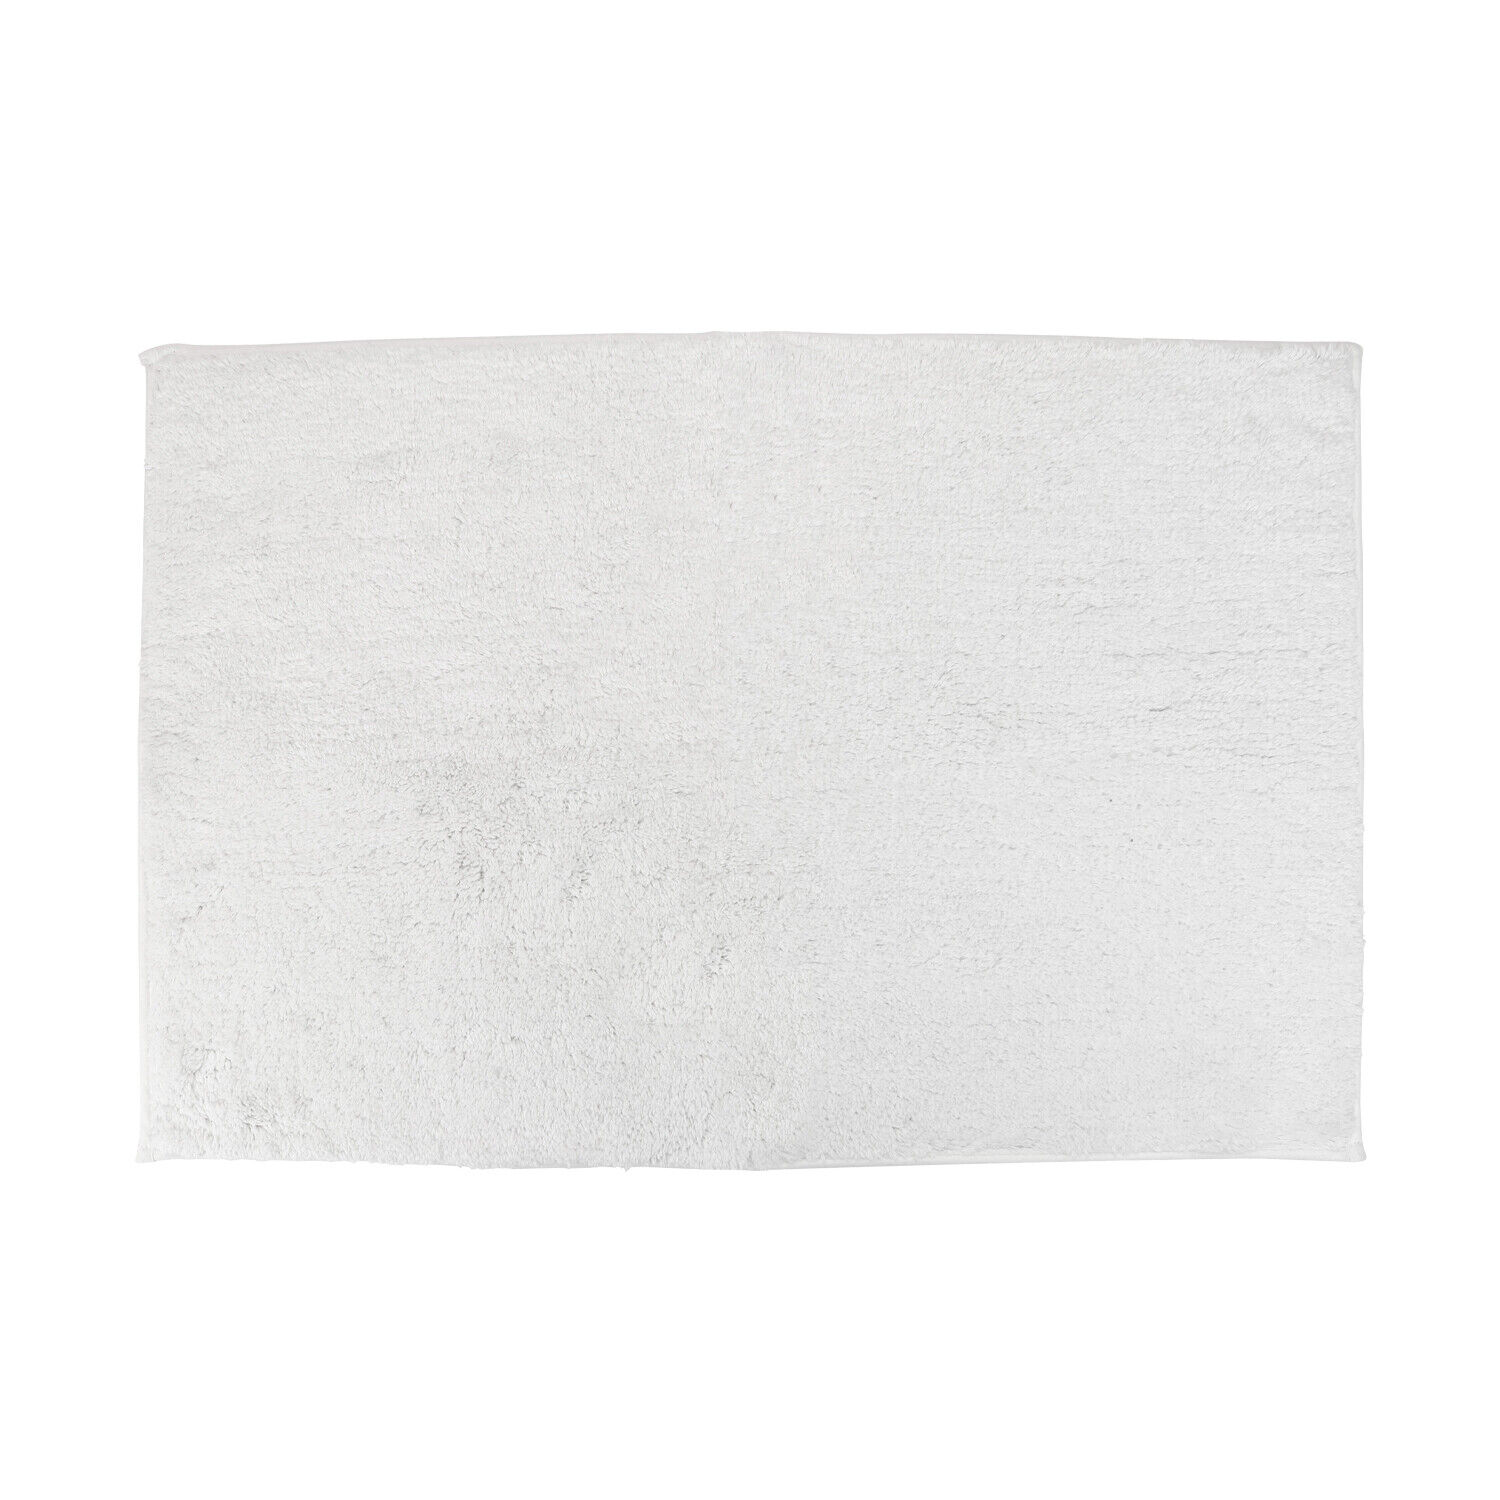 Bulk 6-Pack of Bath Mat Rugs - 20 x 30 White Cotton Bathroom Floor Non-Slip Arkwright Does Not Apply - фотография #5